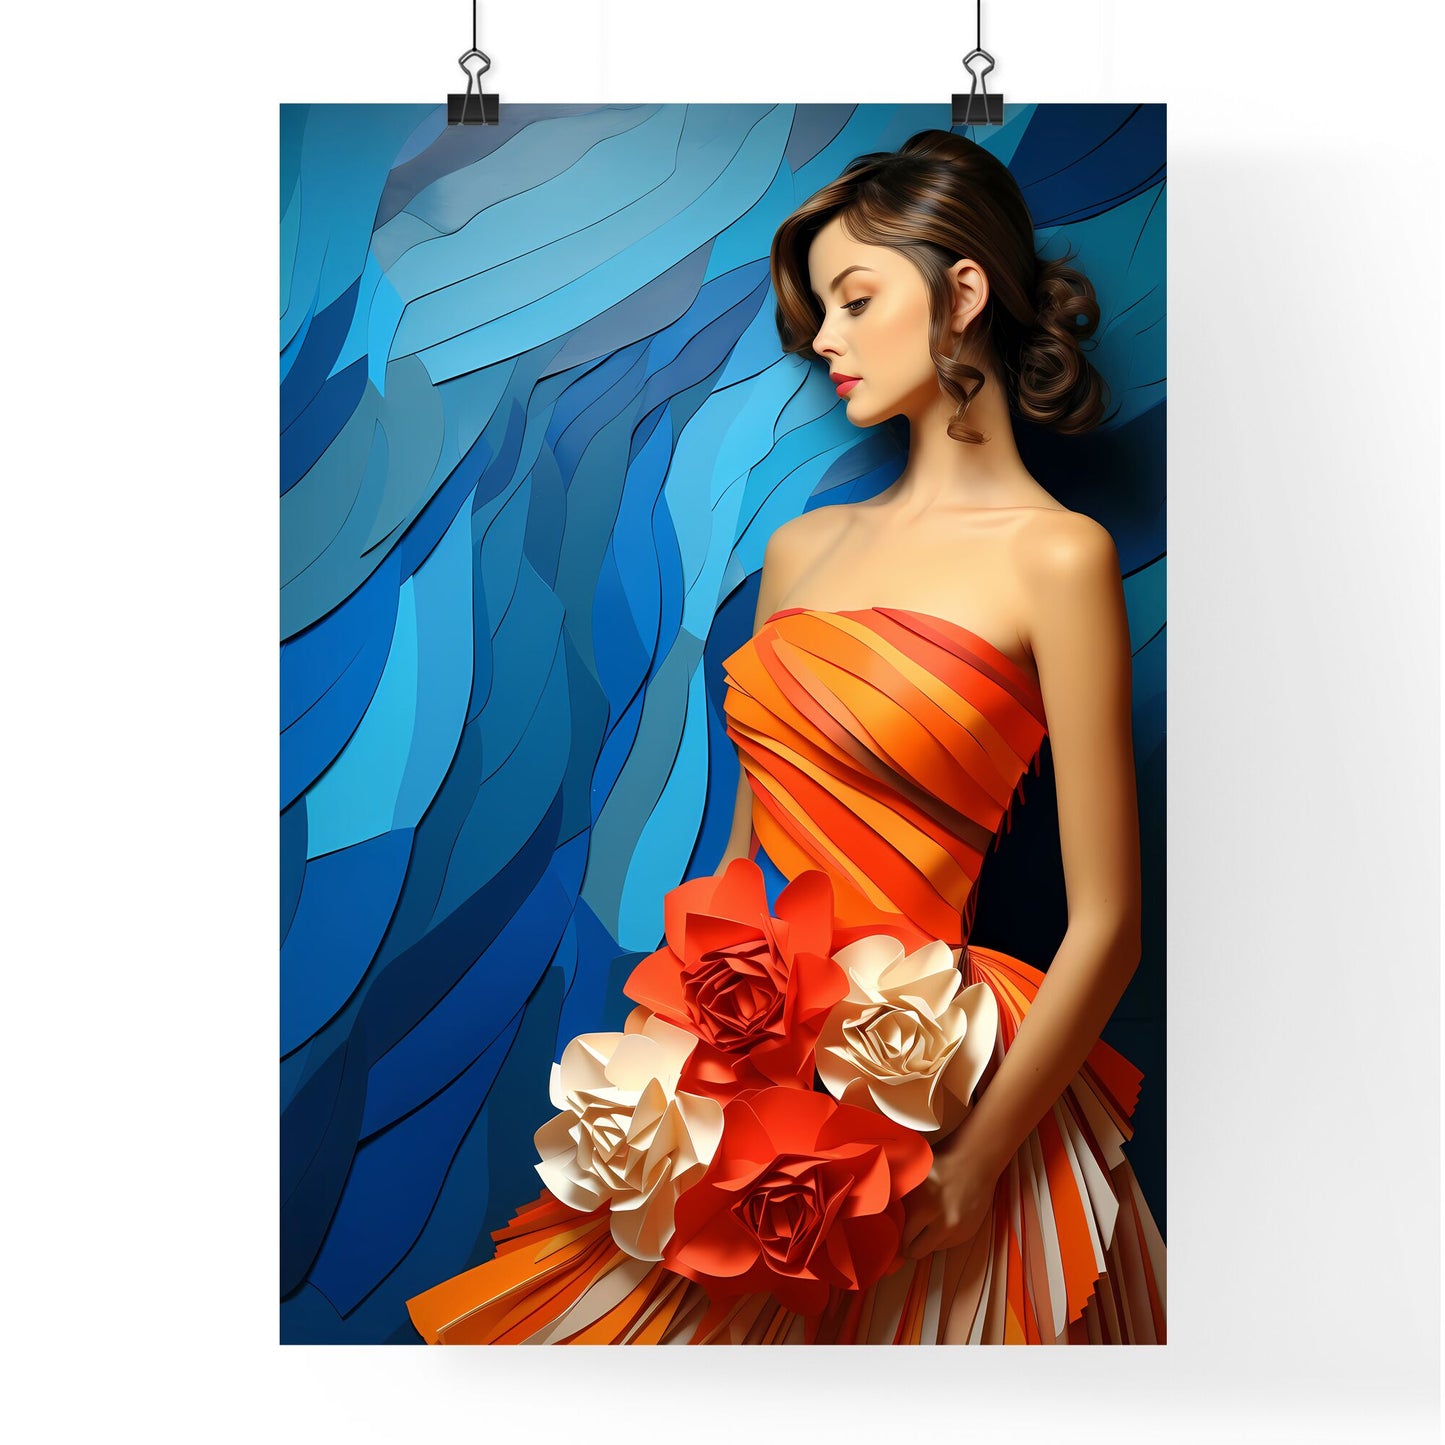 Woman In An Orange Dress With Flowers Art Print Default Title